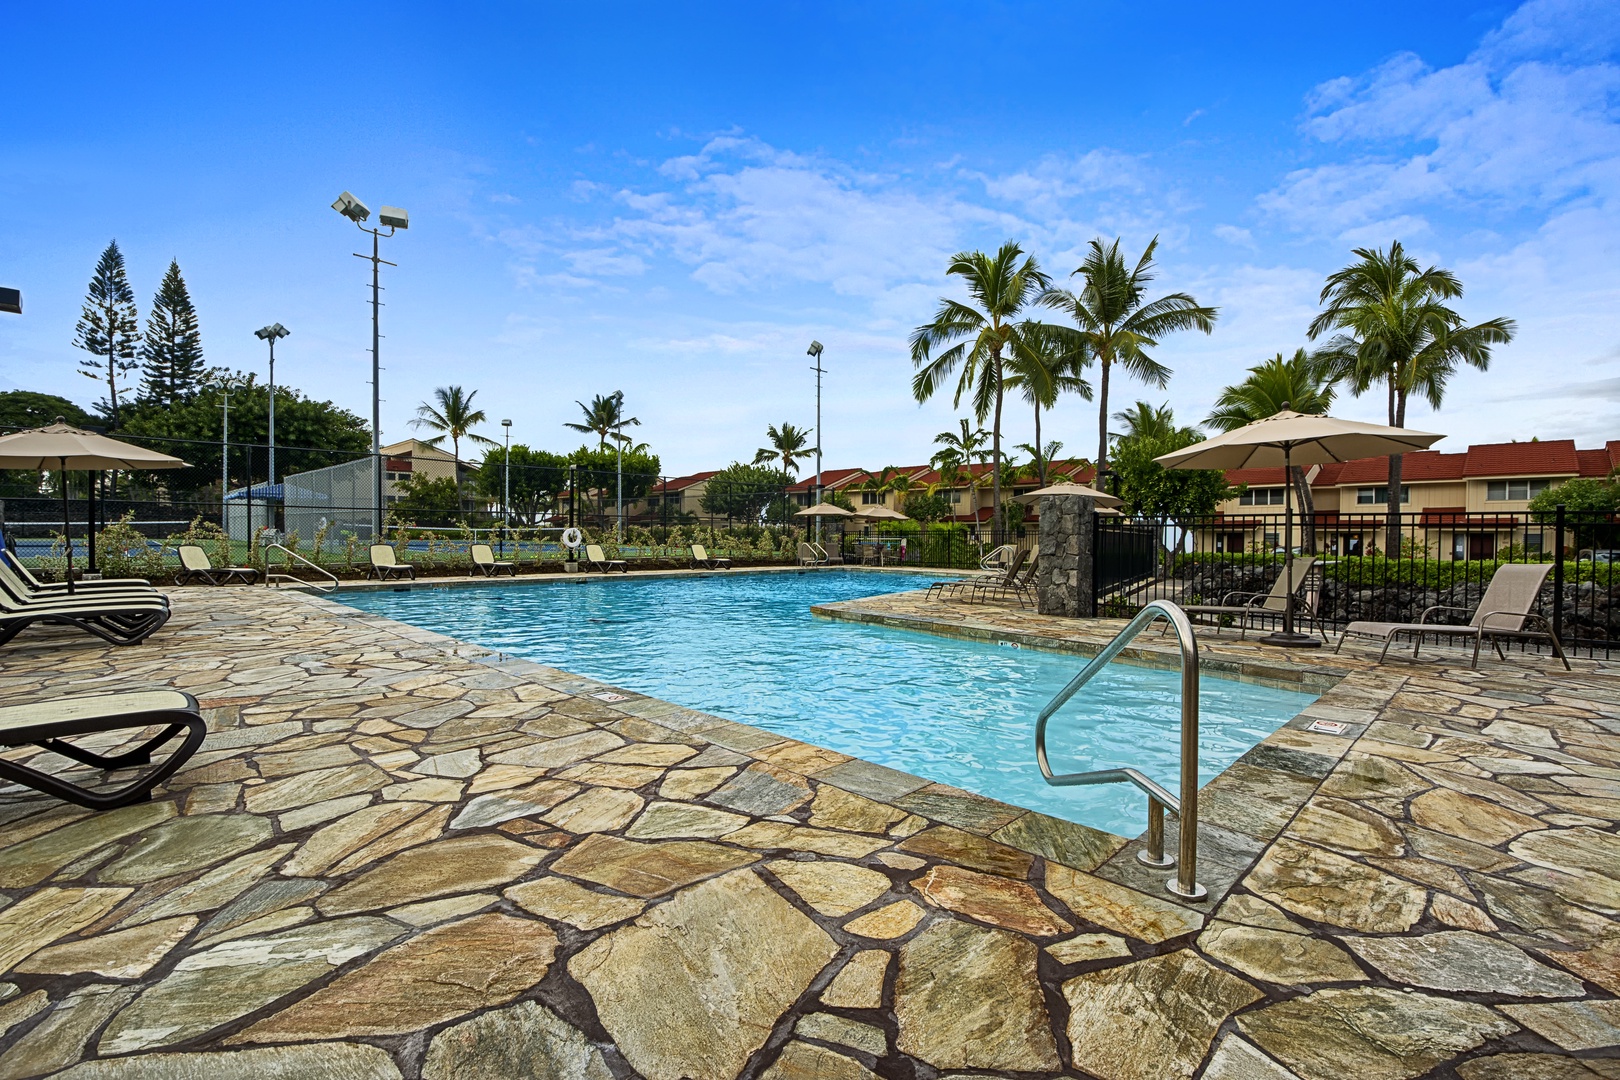 Kailua Kona Vacation Rentals, Keauhou Kona Surf & Racquet 2101 - Take a refreshing dip at the condo pool.